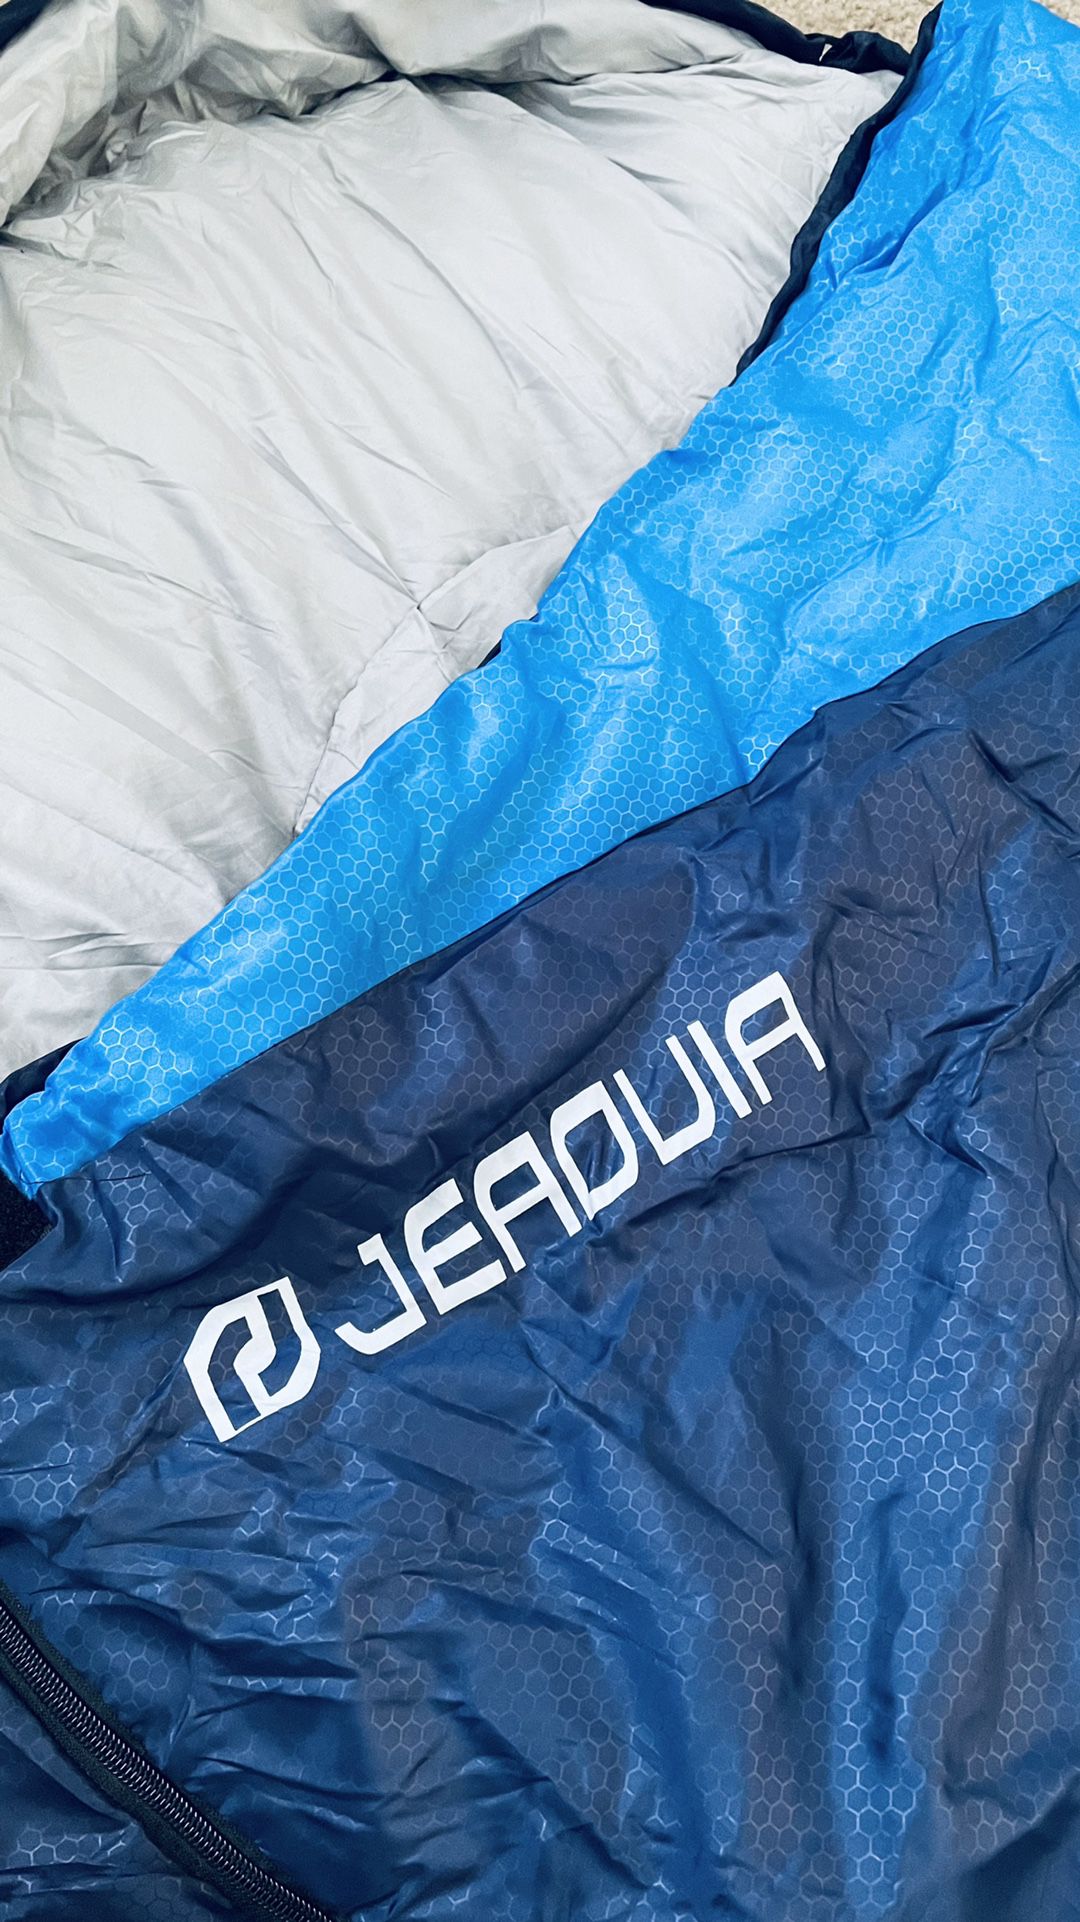 ✅✅ Brand new sleeping bag lightweight waterproof adult kids men women unisex camping hiking sleep